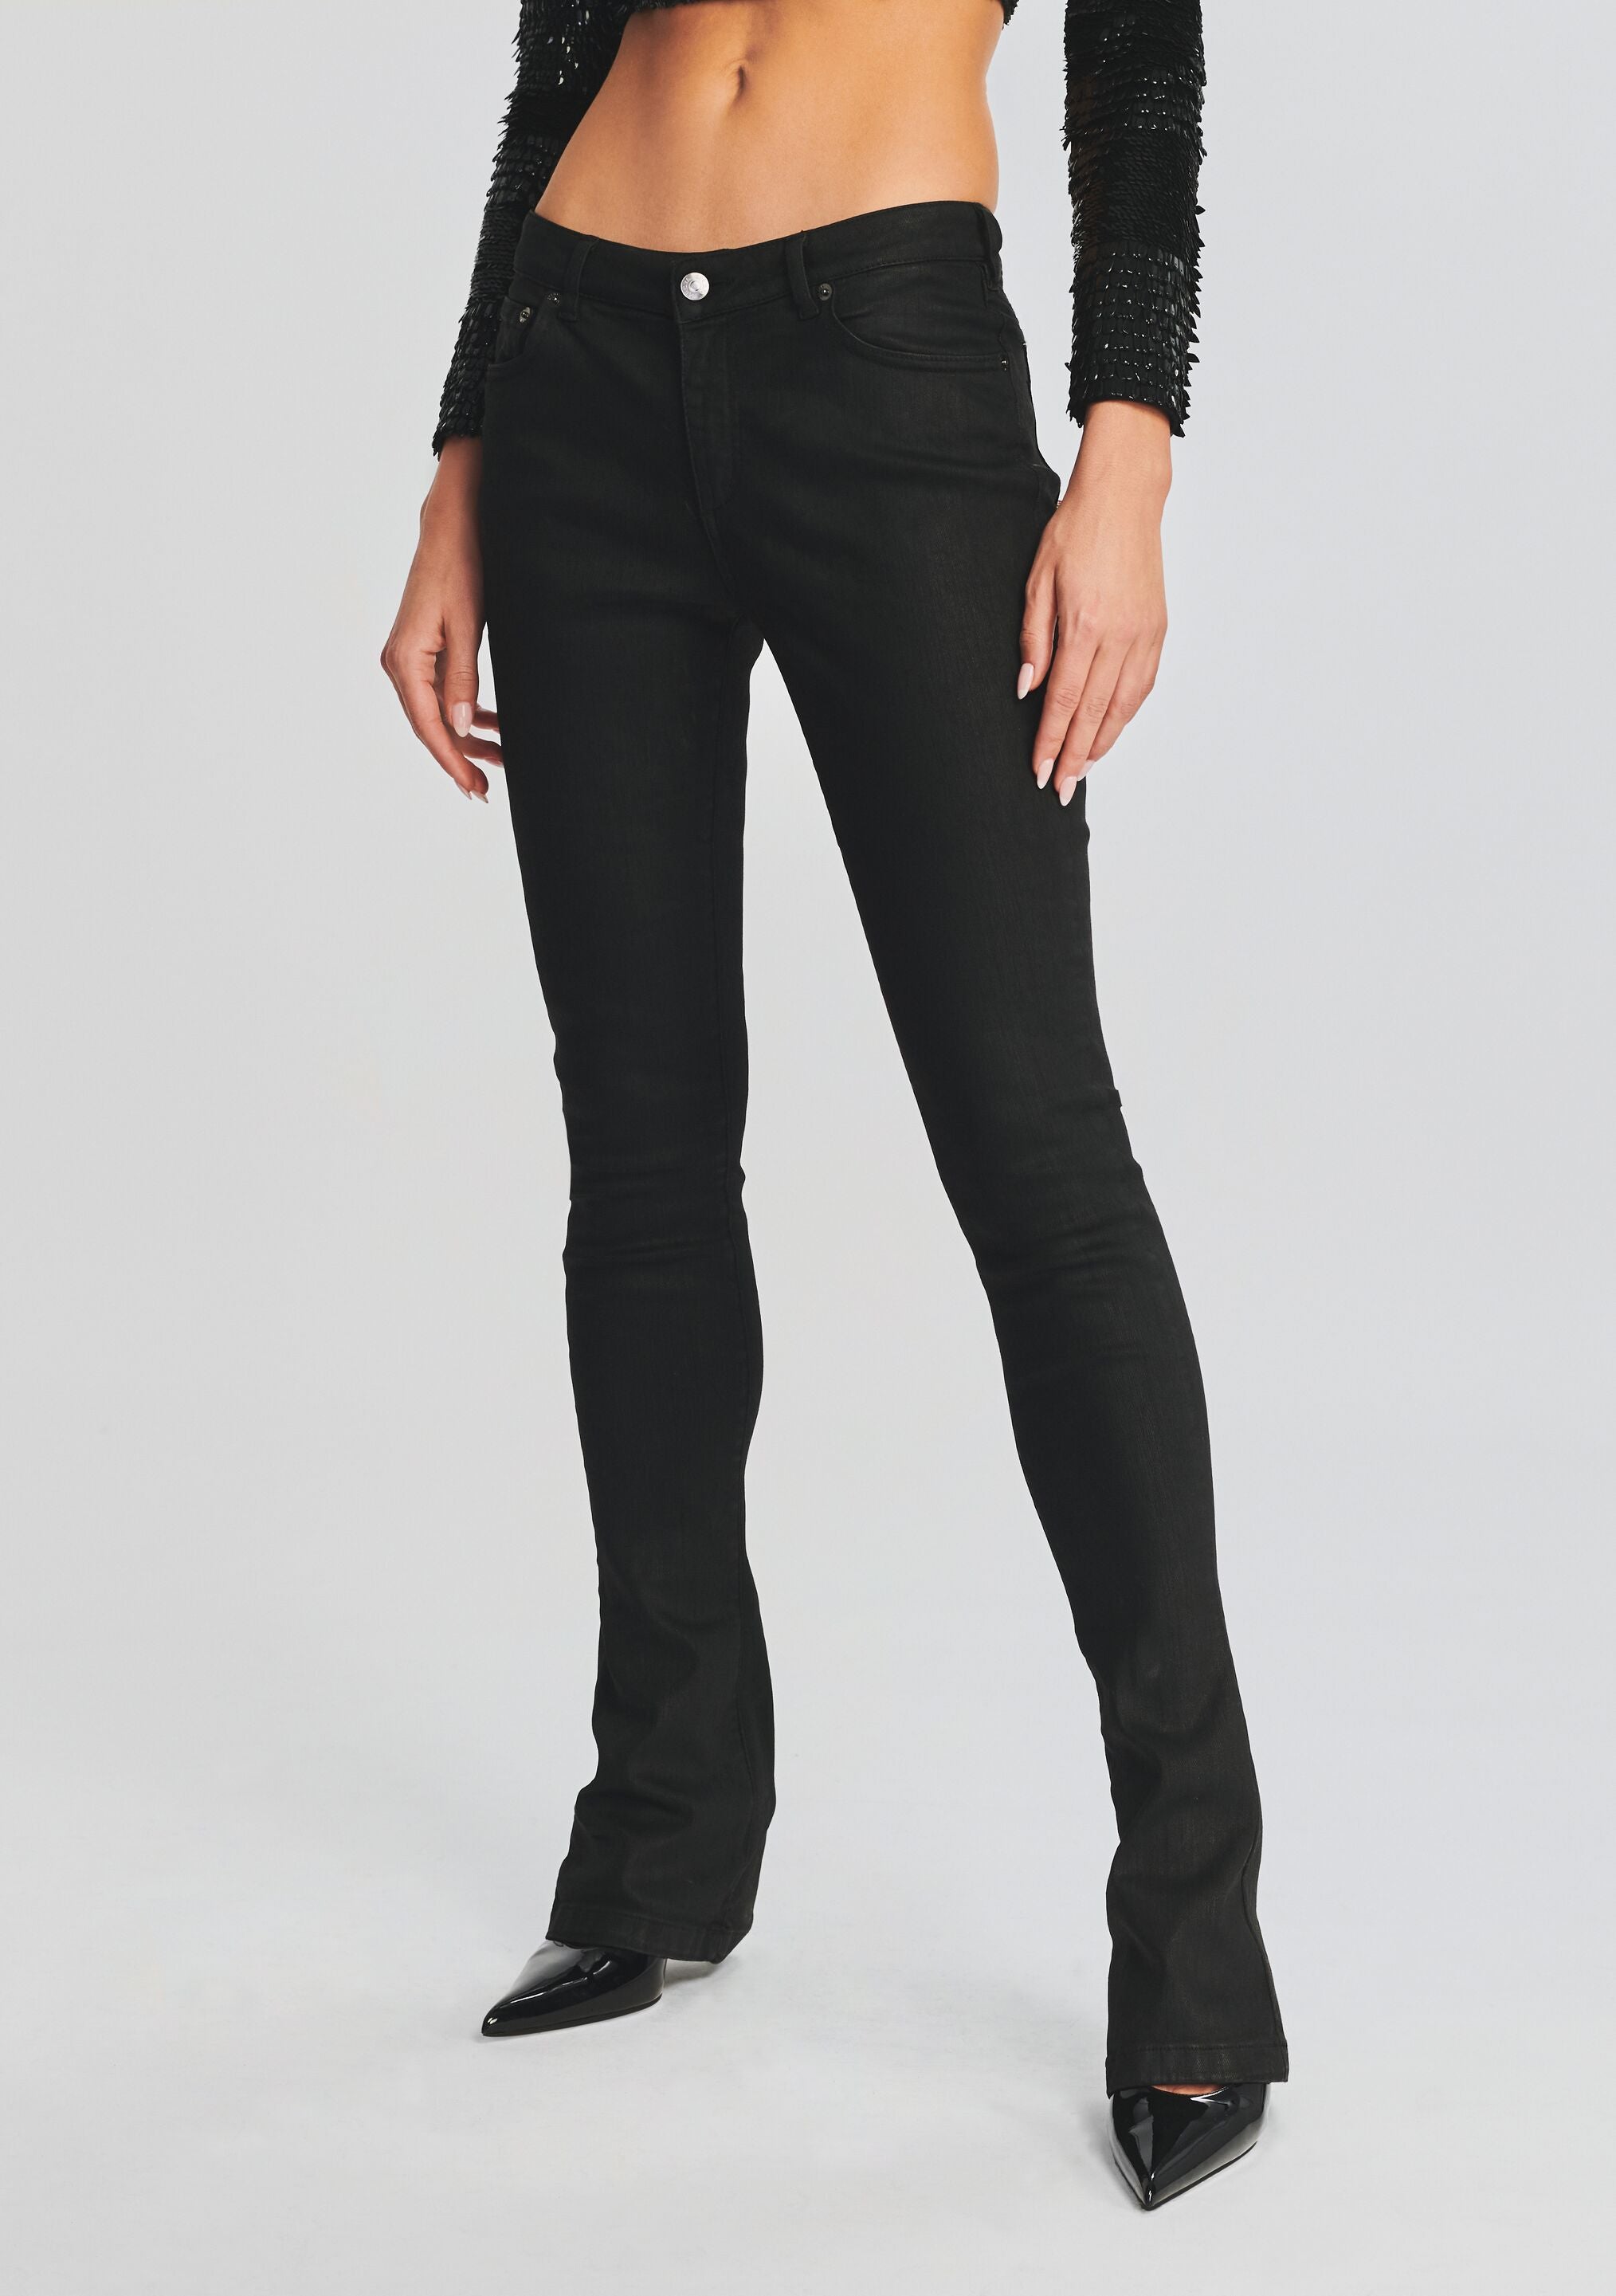 Wax Jeans Women's Juniors High Rise Exposed Button Skinny Jeans, Light Denim  Wash, 0 price in UAE | Amazon UAE | kanbkam